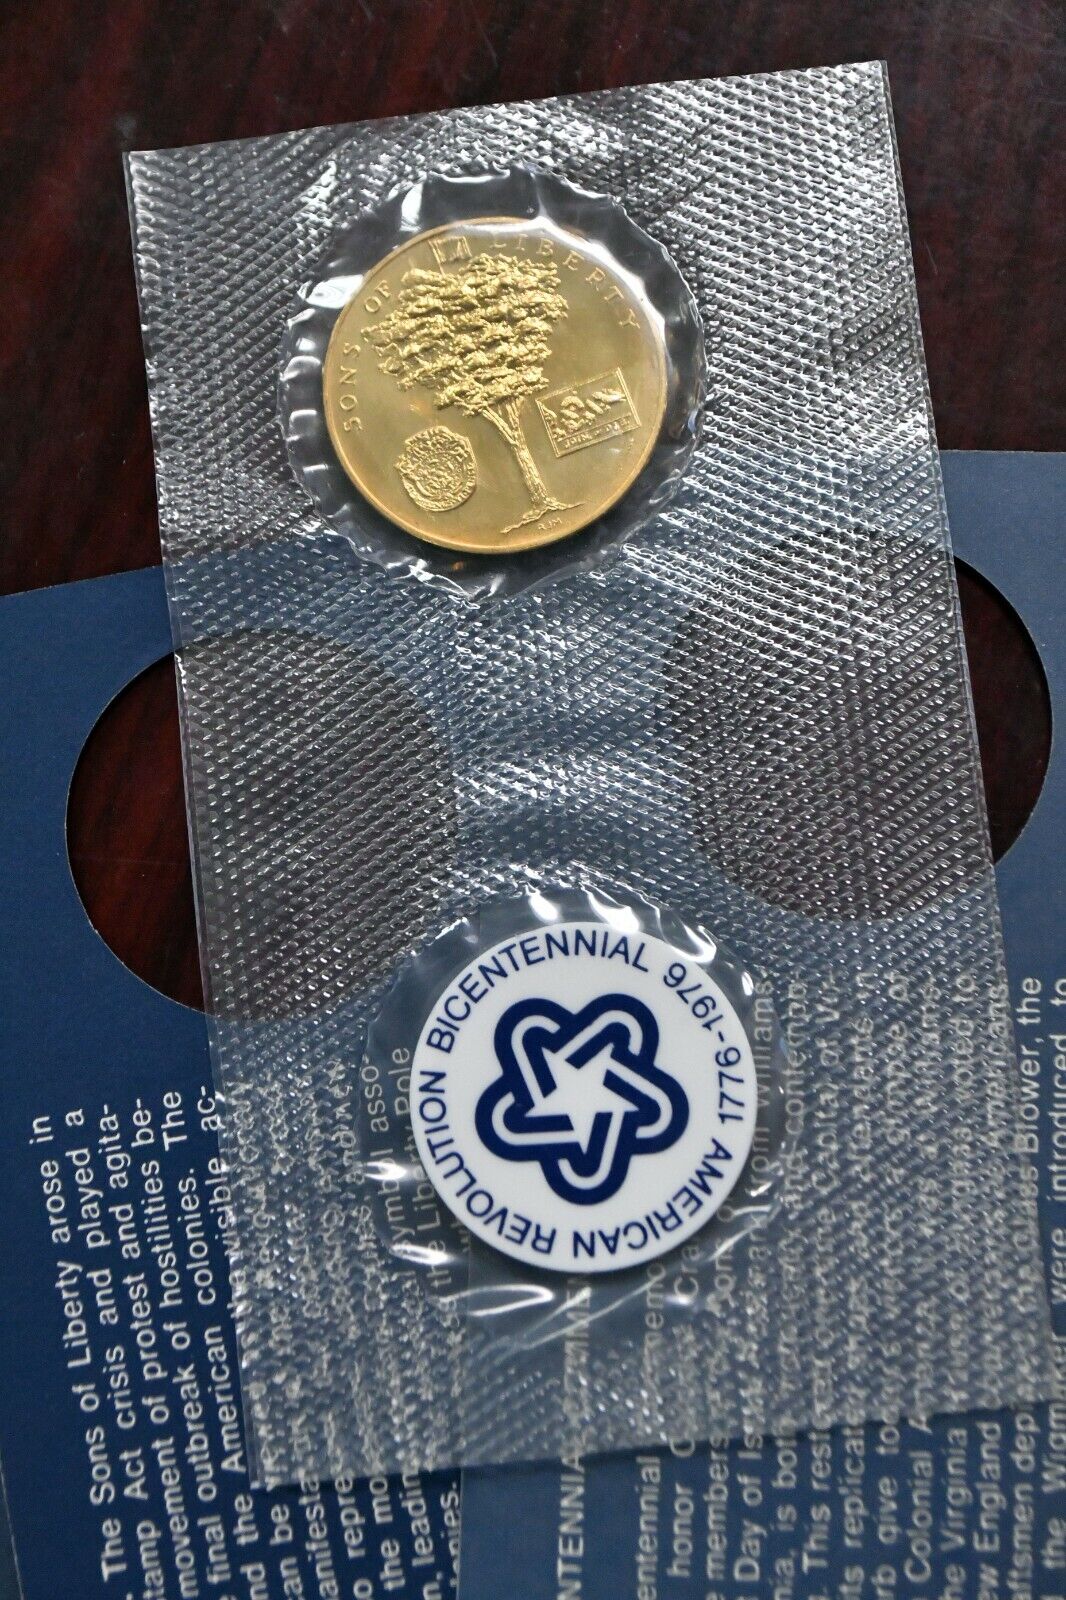 1972 American Revolution Bicentennial Medal Commemorative George Washington